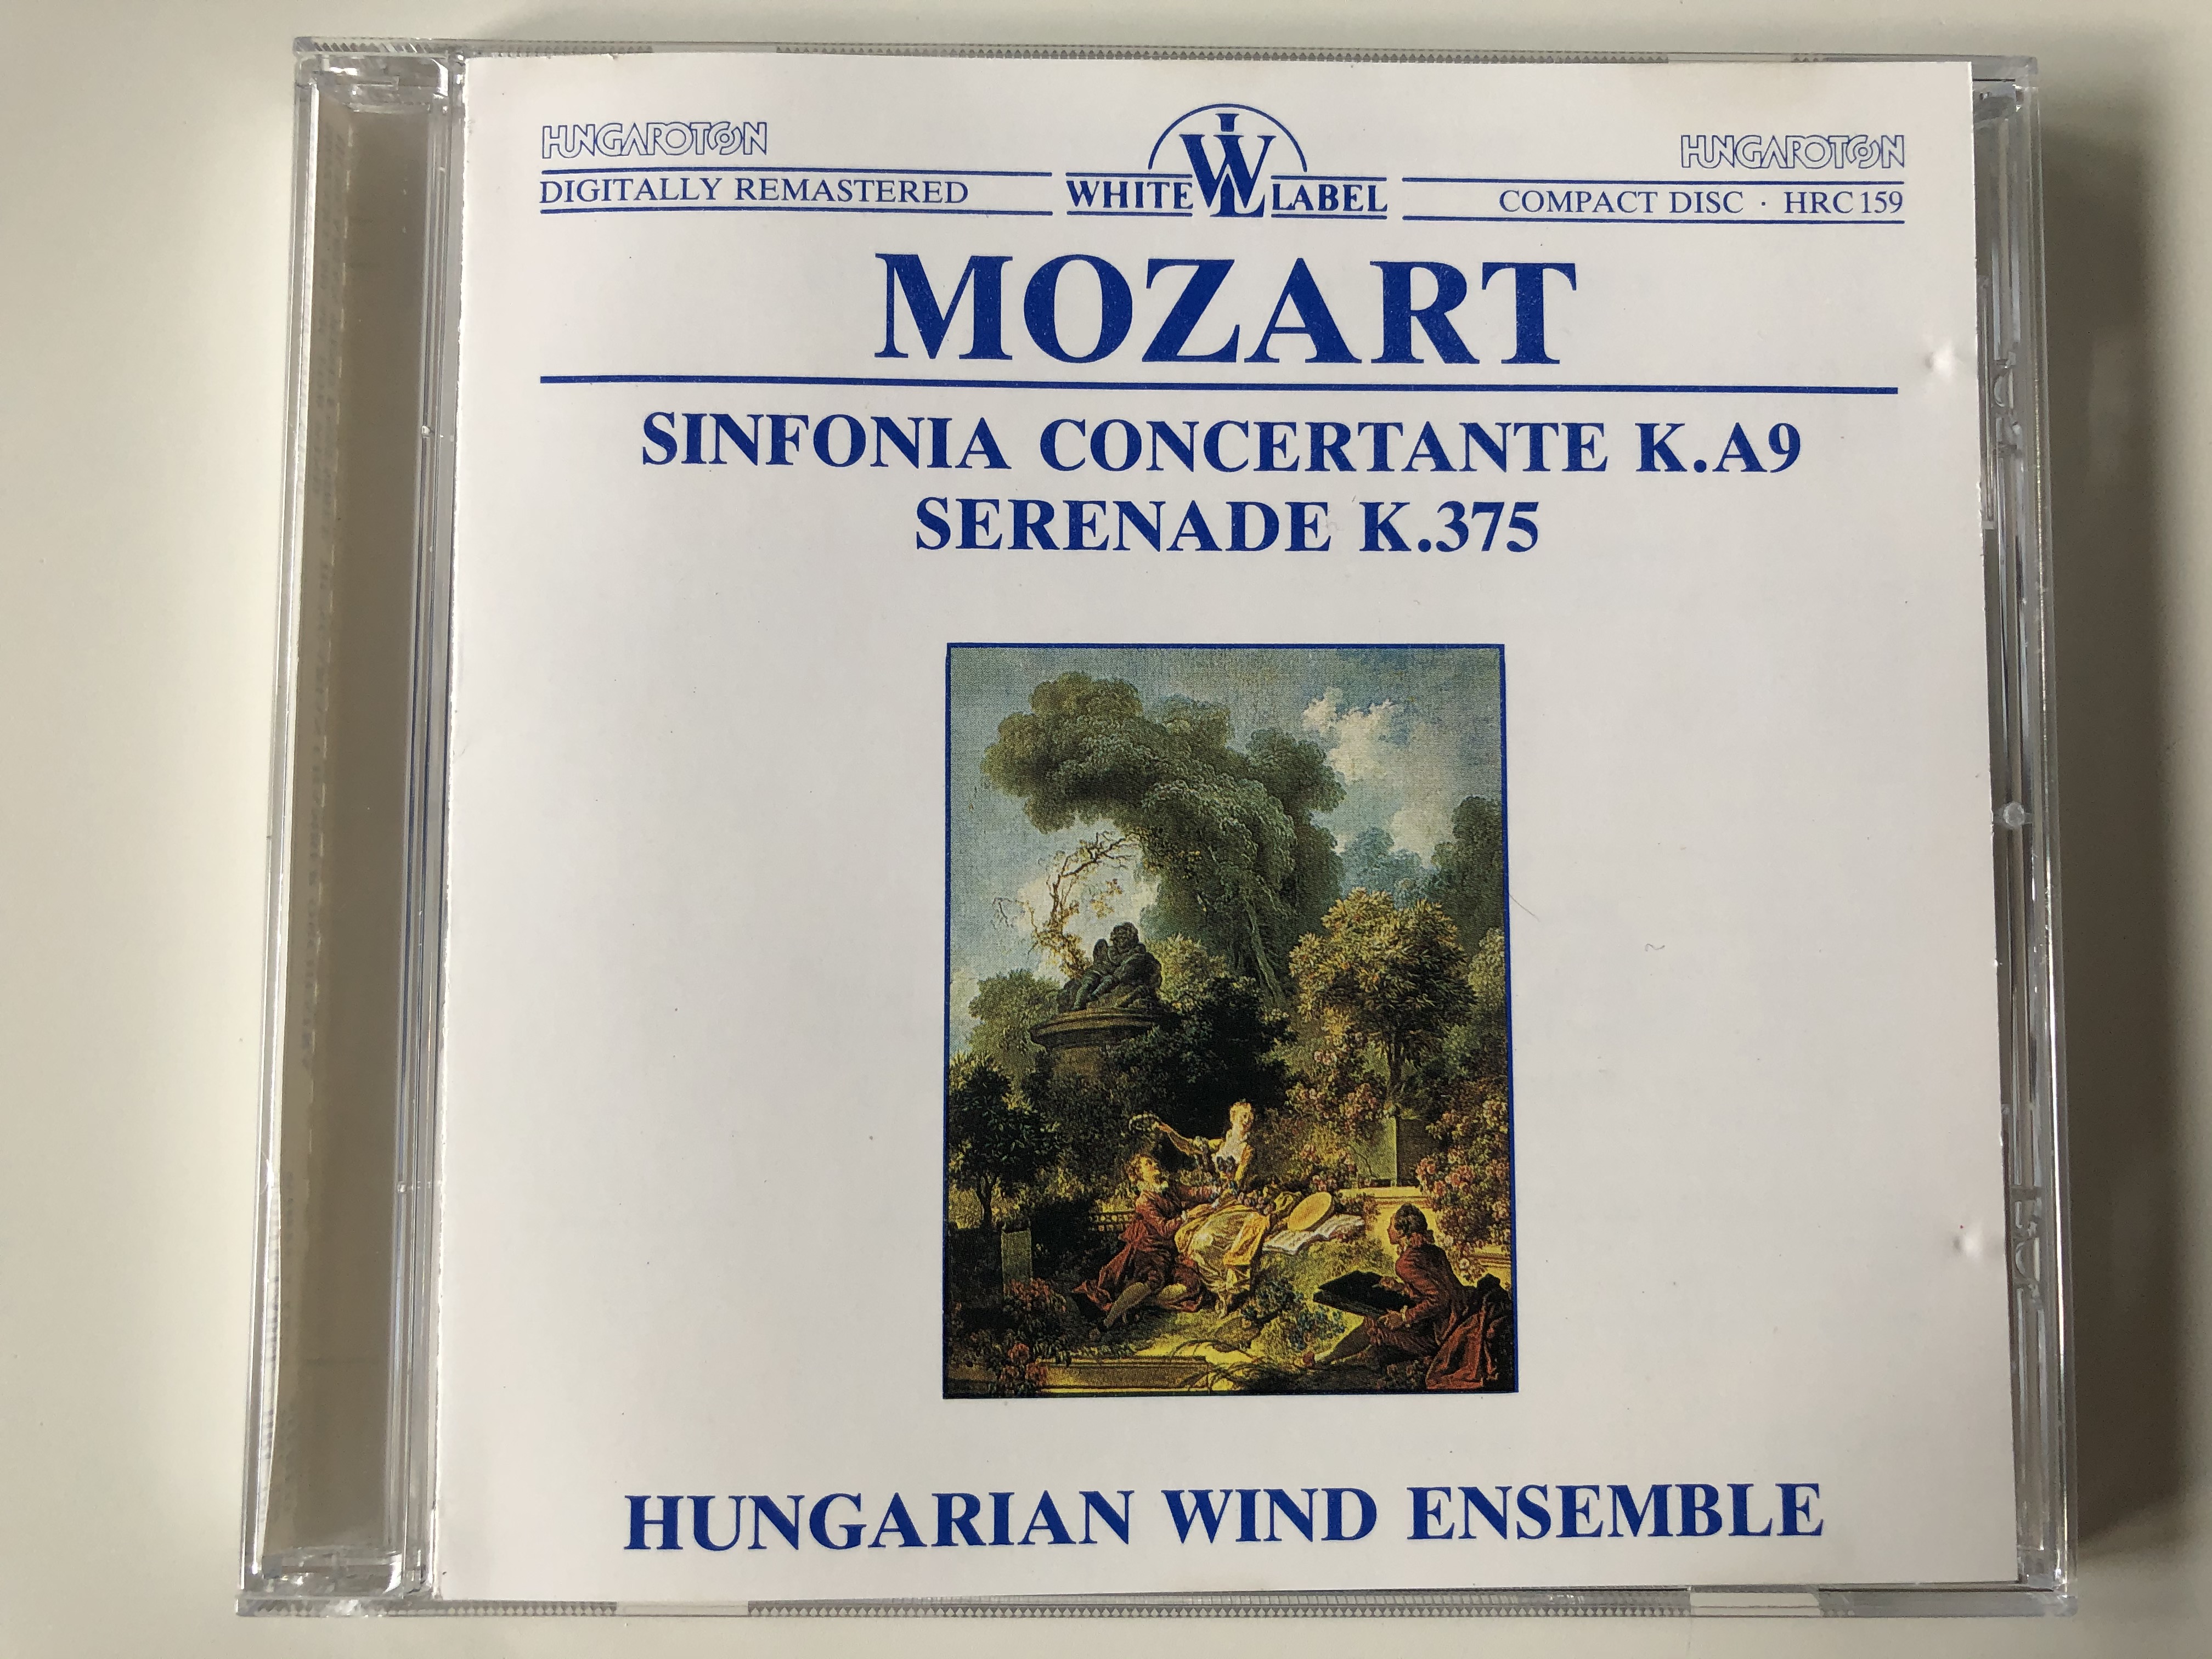 mozart-sinfonia-concertante-k.-a9-serenade-k.375-hungarian-wind-ensemble-hungaroton-audio-cd-1990-stereo-hrc-159-1-.jpg